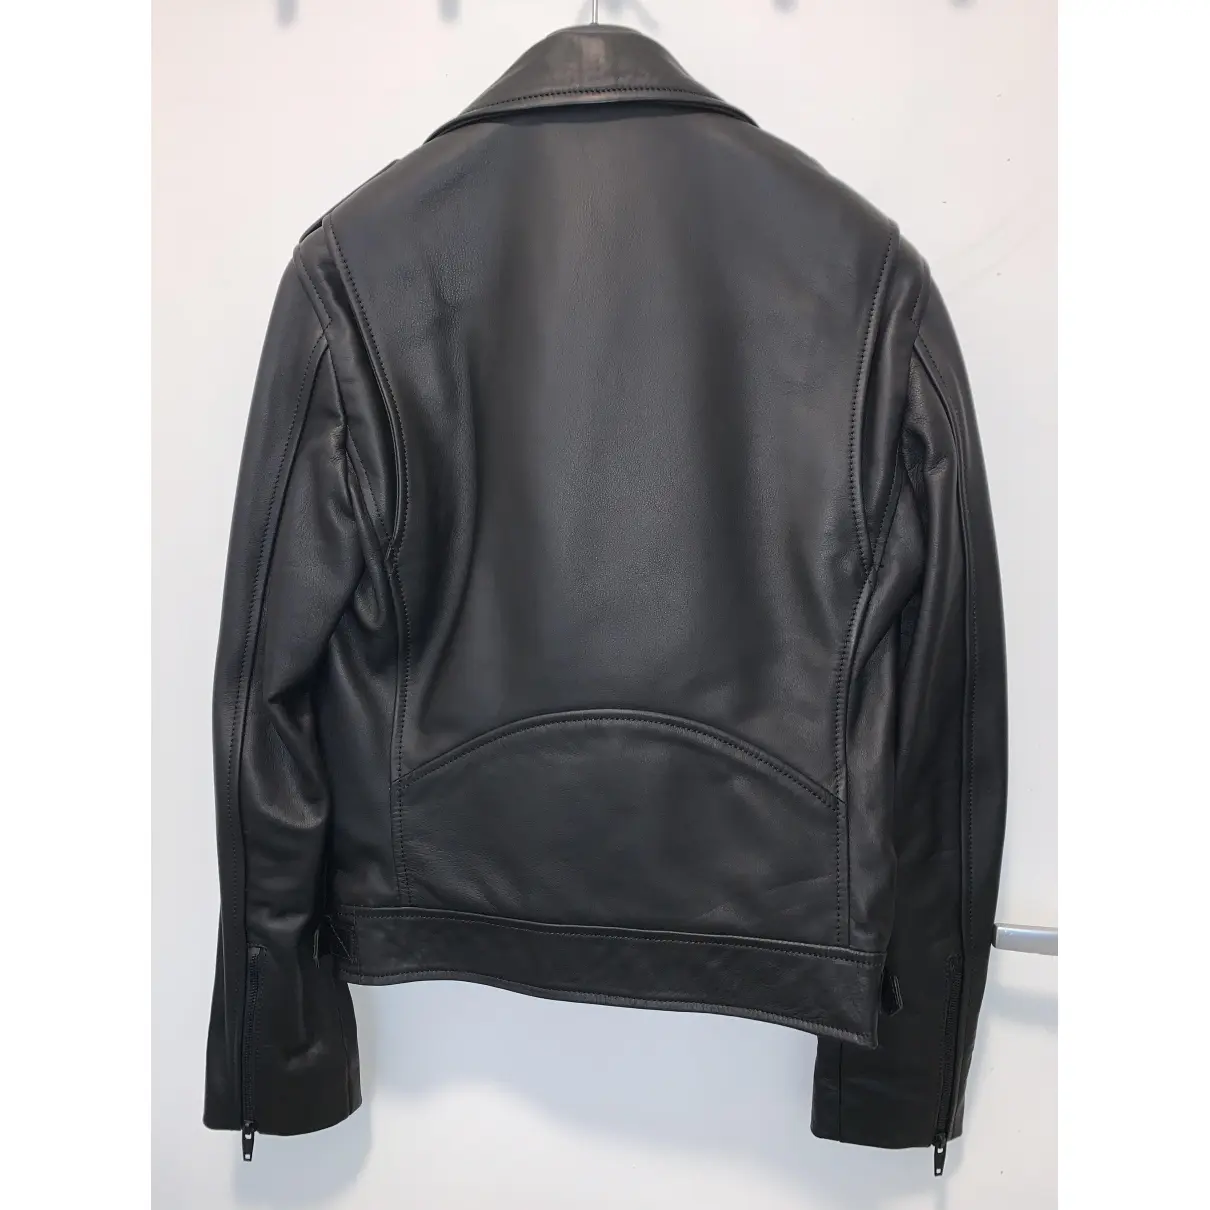 Buy The Kooples Fall Winter 2019 leather jacket online